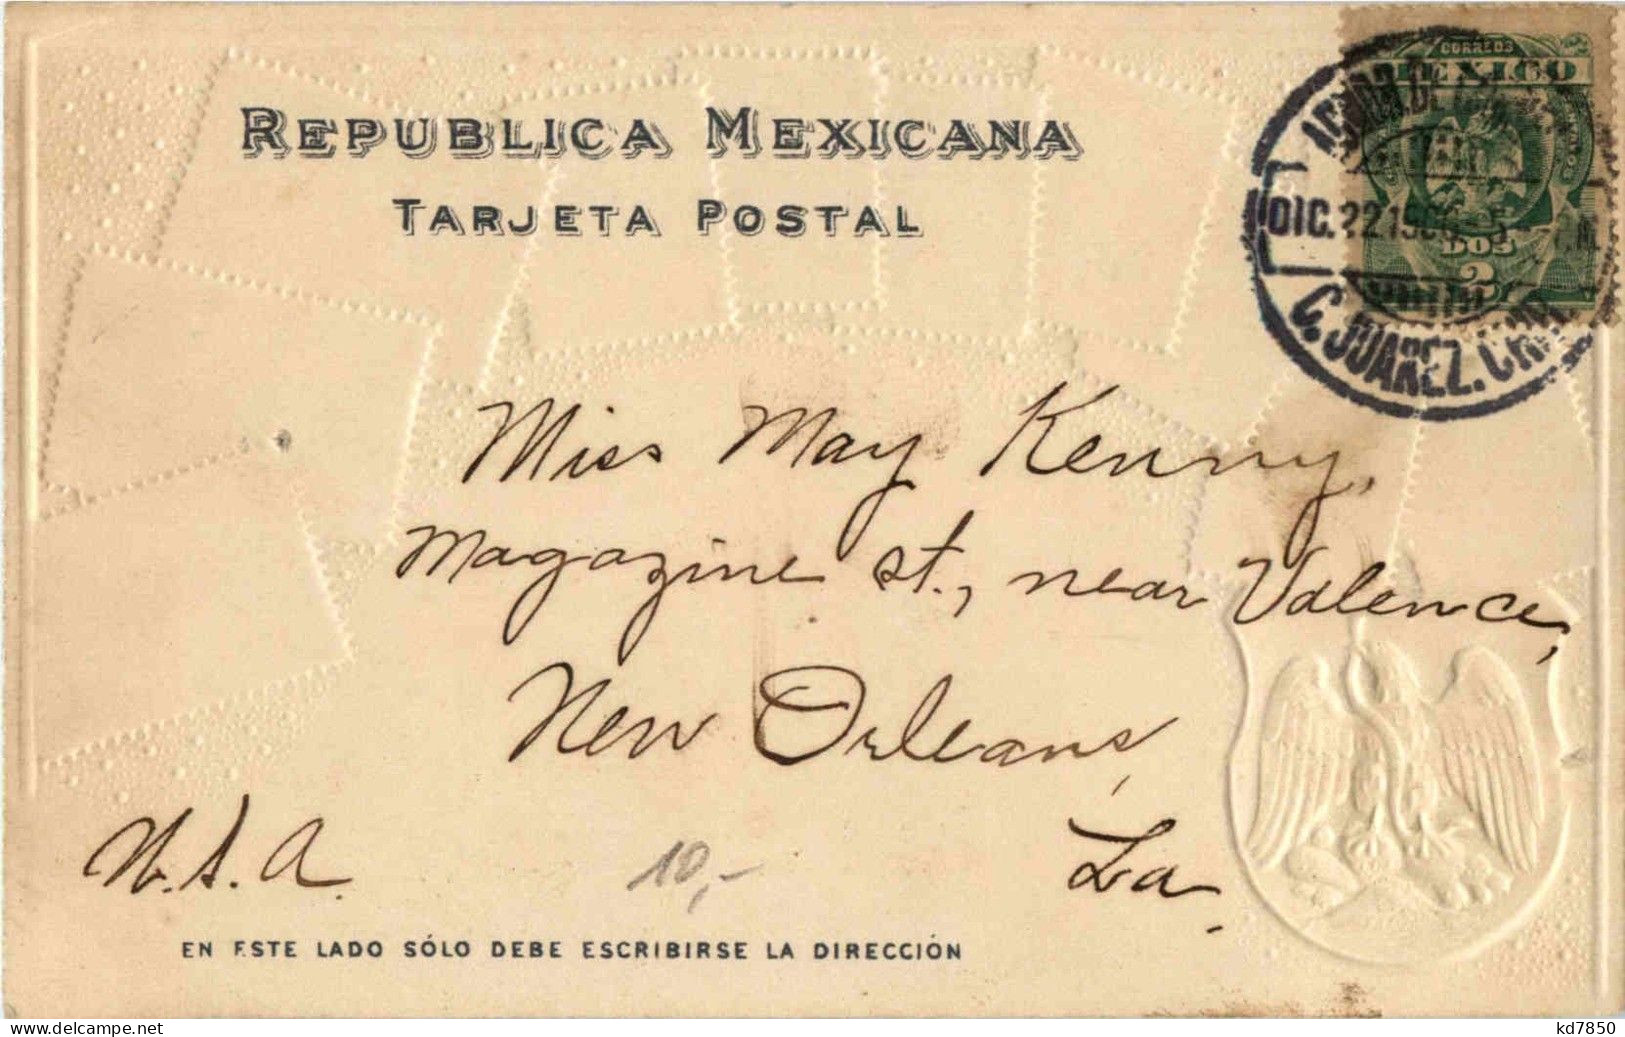 Mexico - Briefmarken - Stamps - Prägekarte - Timbres (représentations)